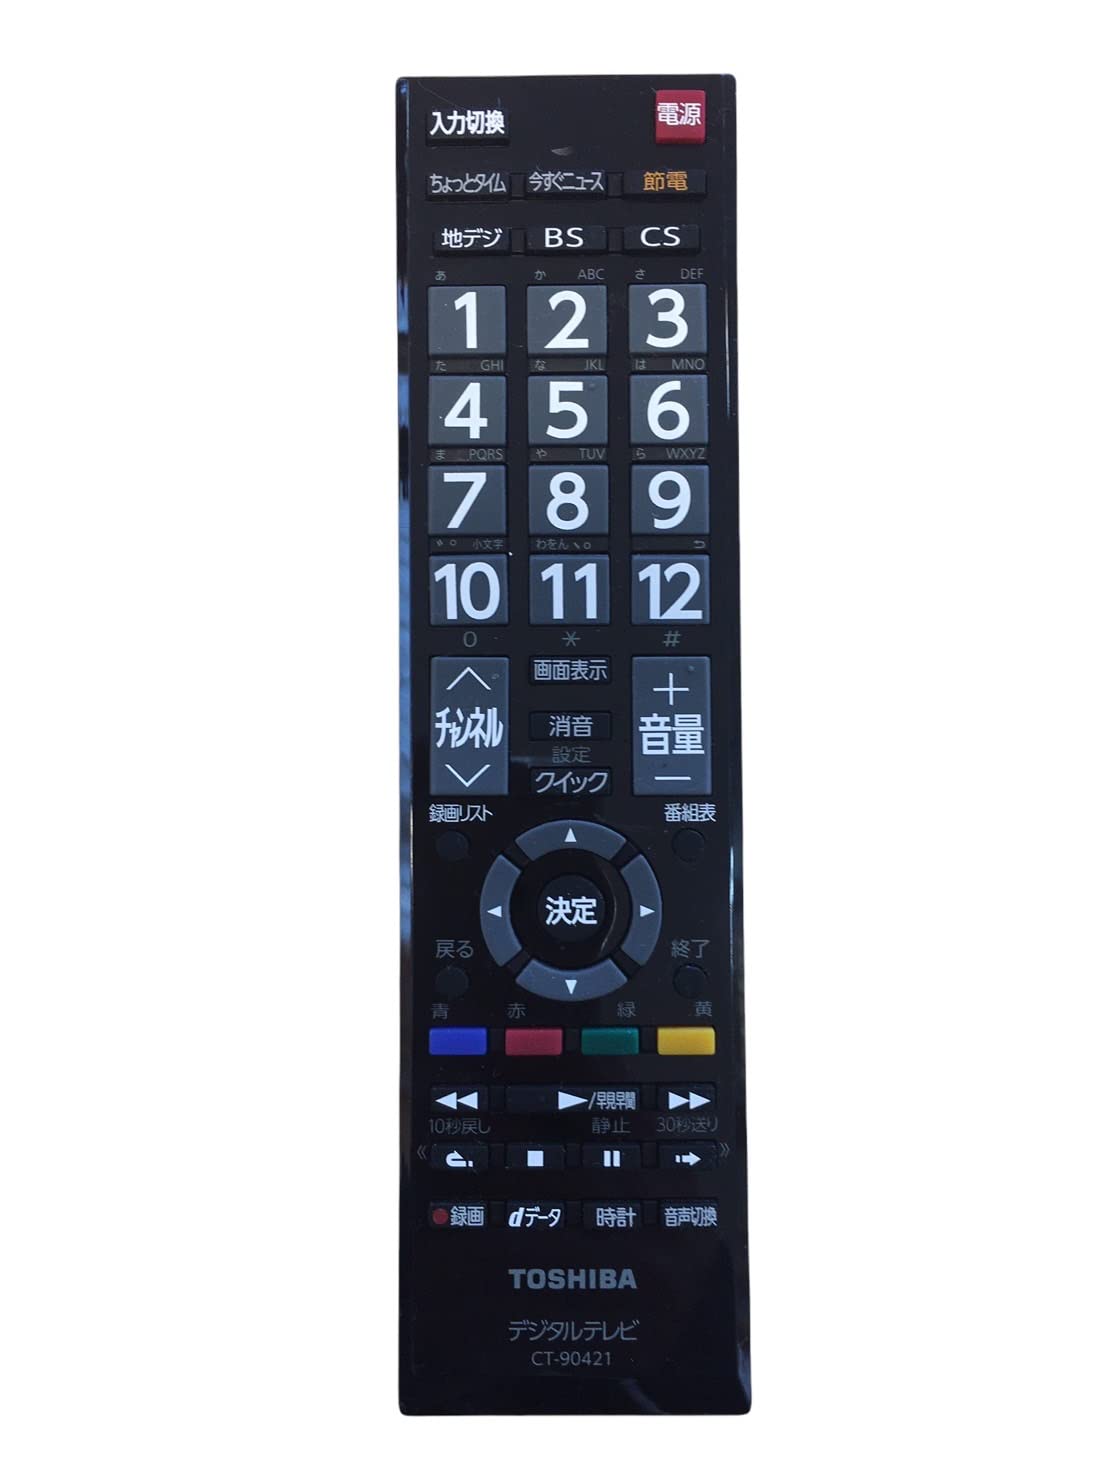  Toshiba original parts for television remote control CT-90421